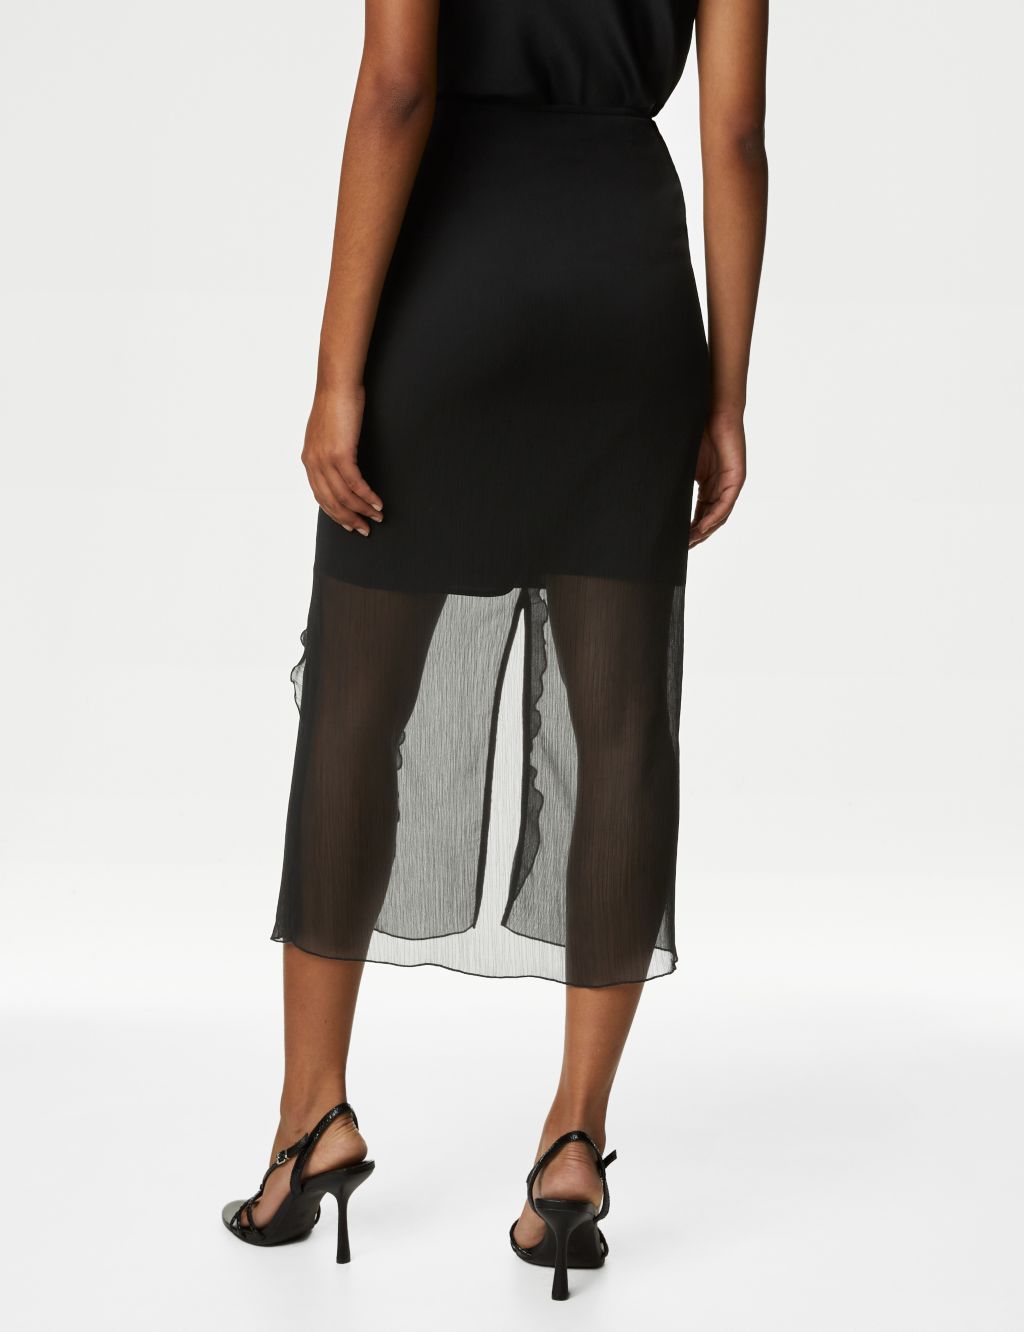 Ruffle Midaxi Split Front Skirt image 4